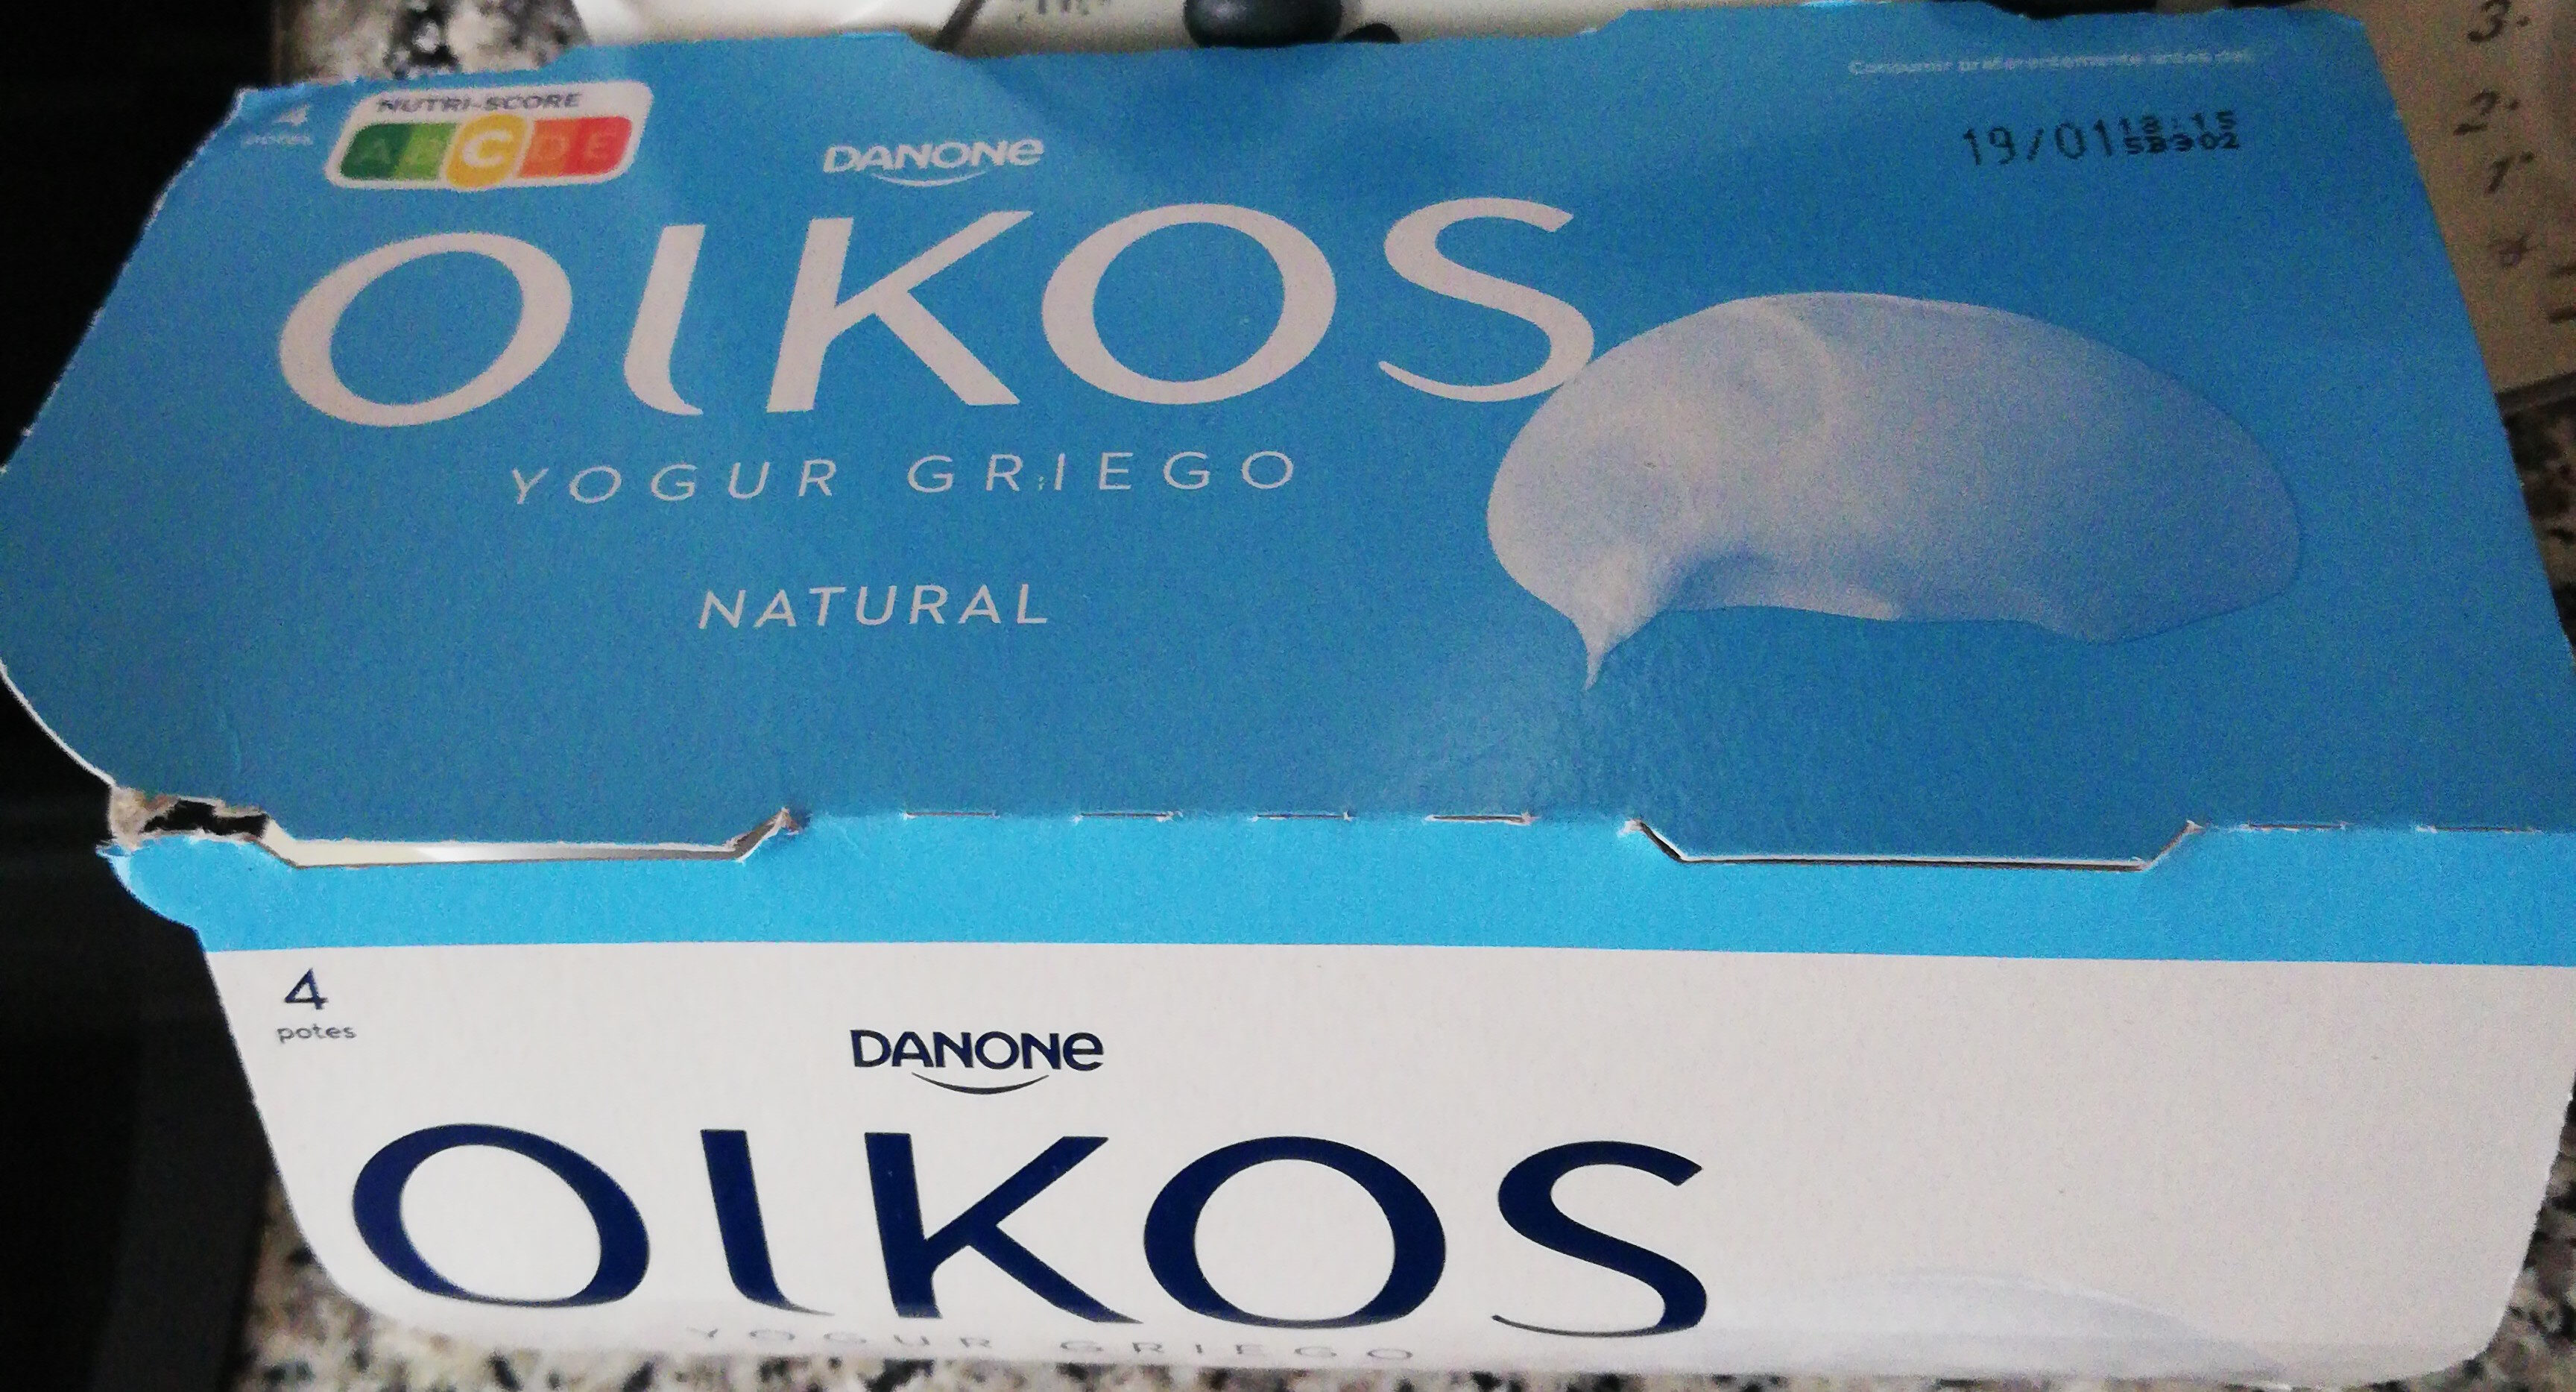 Oikos yogur griego natural - Product - es